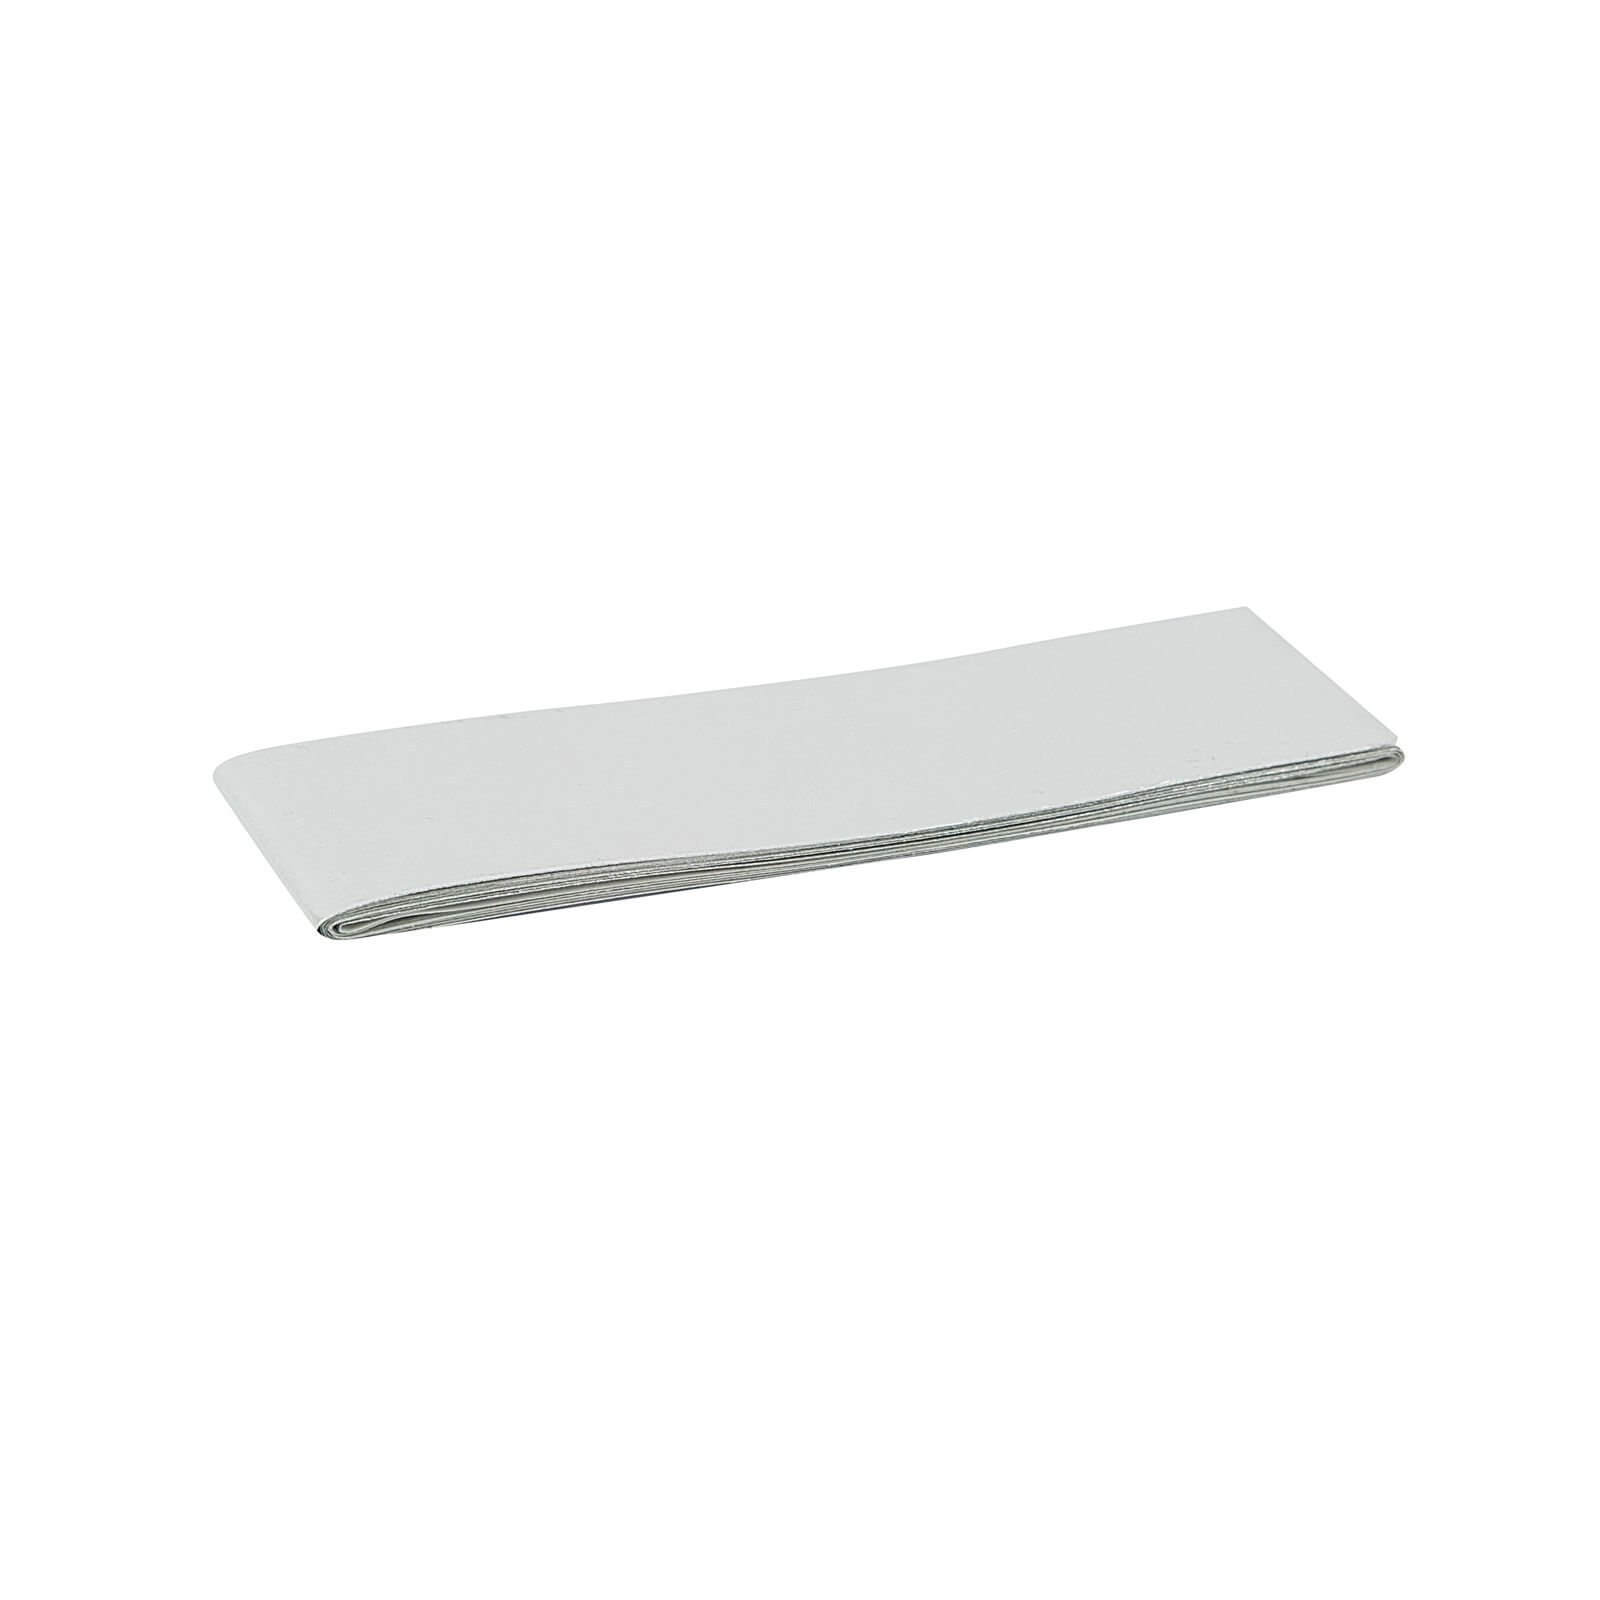 Photo of Unika Worktop Heat Reflective Aluminium Tape